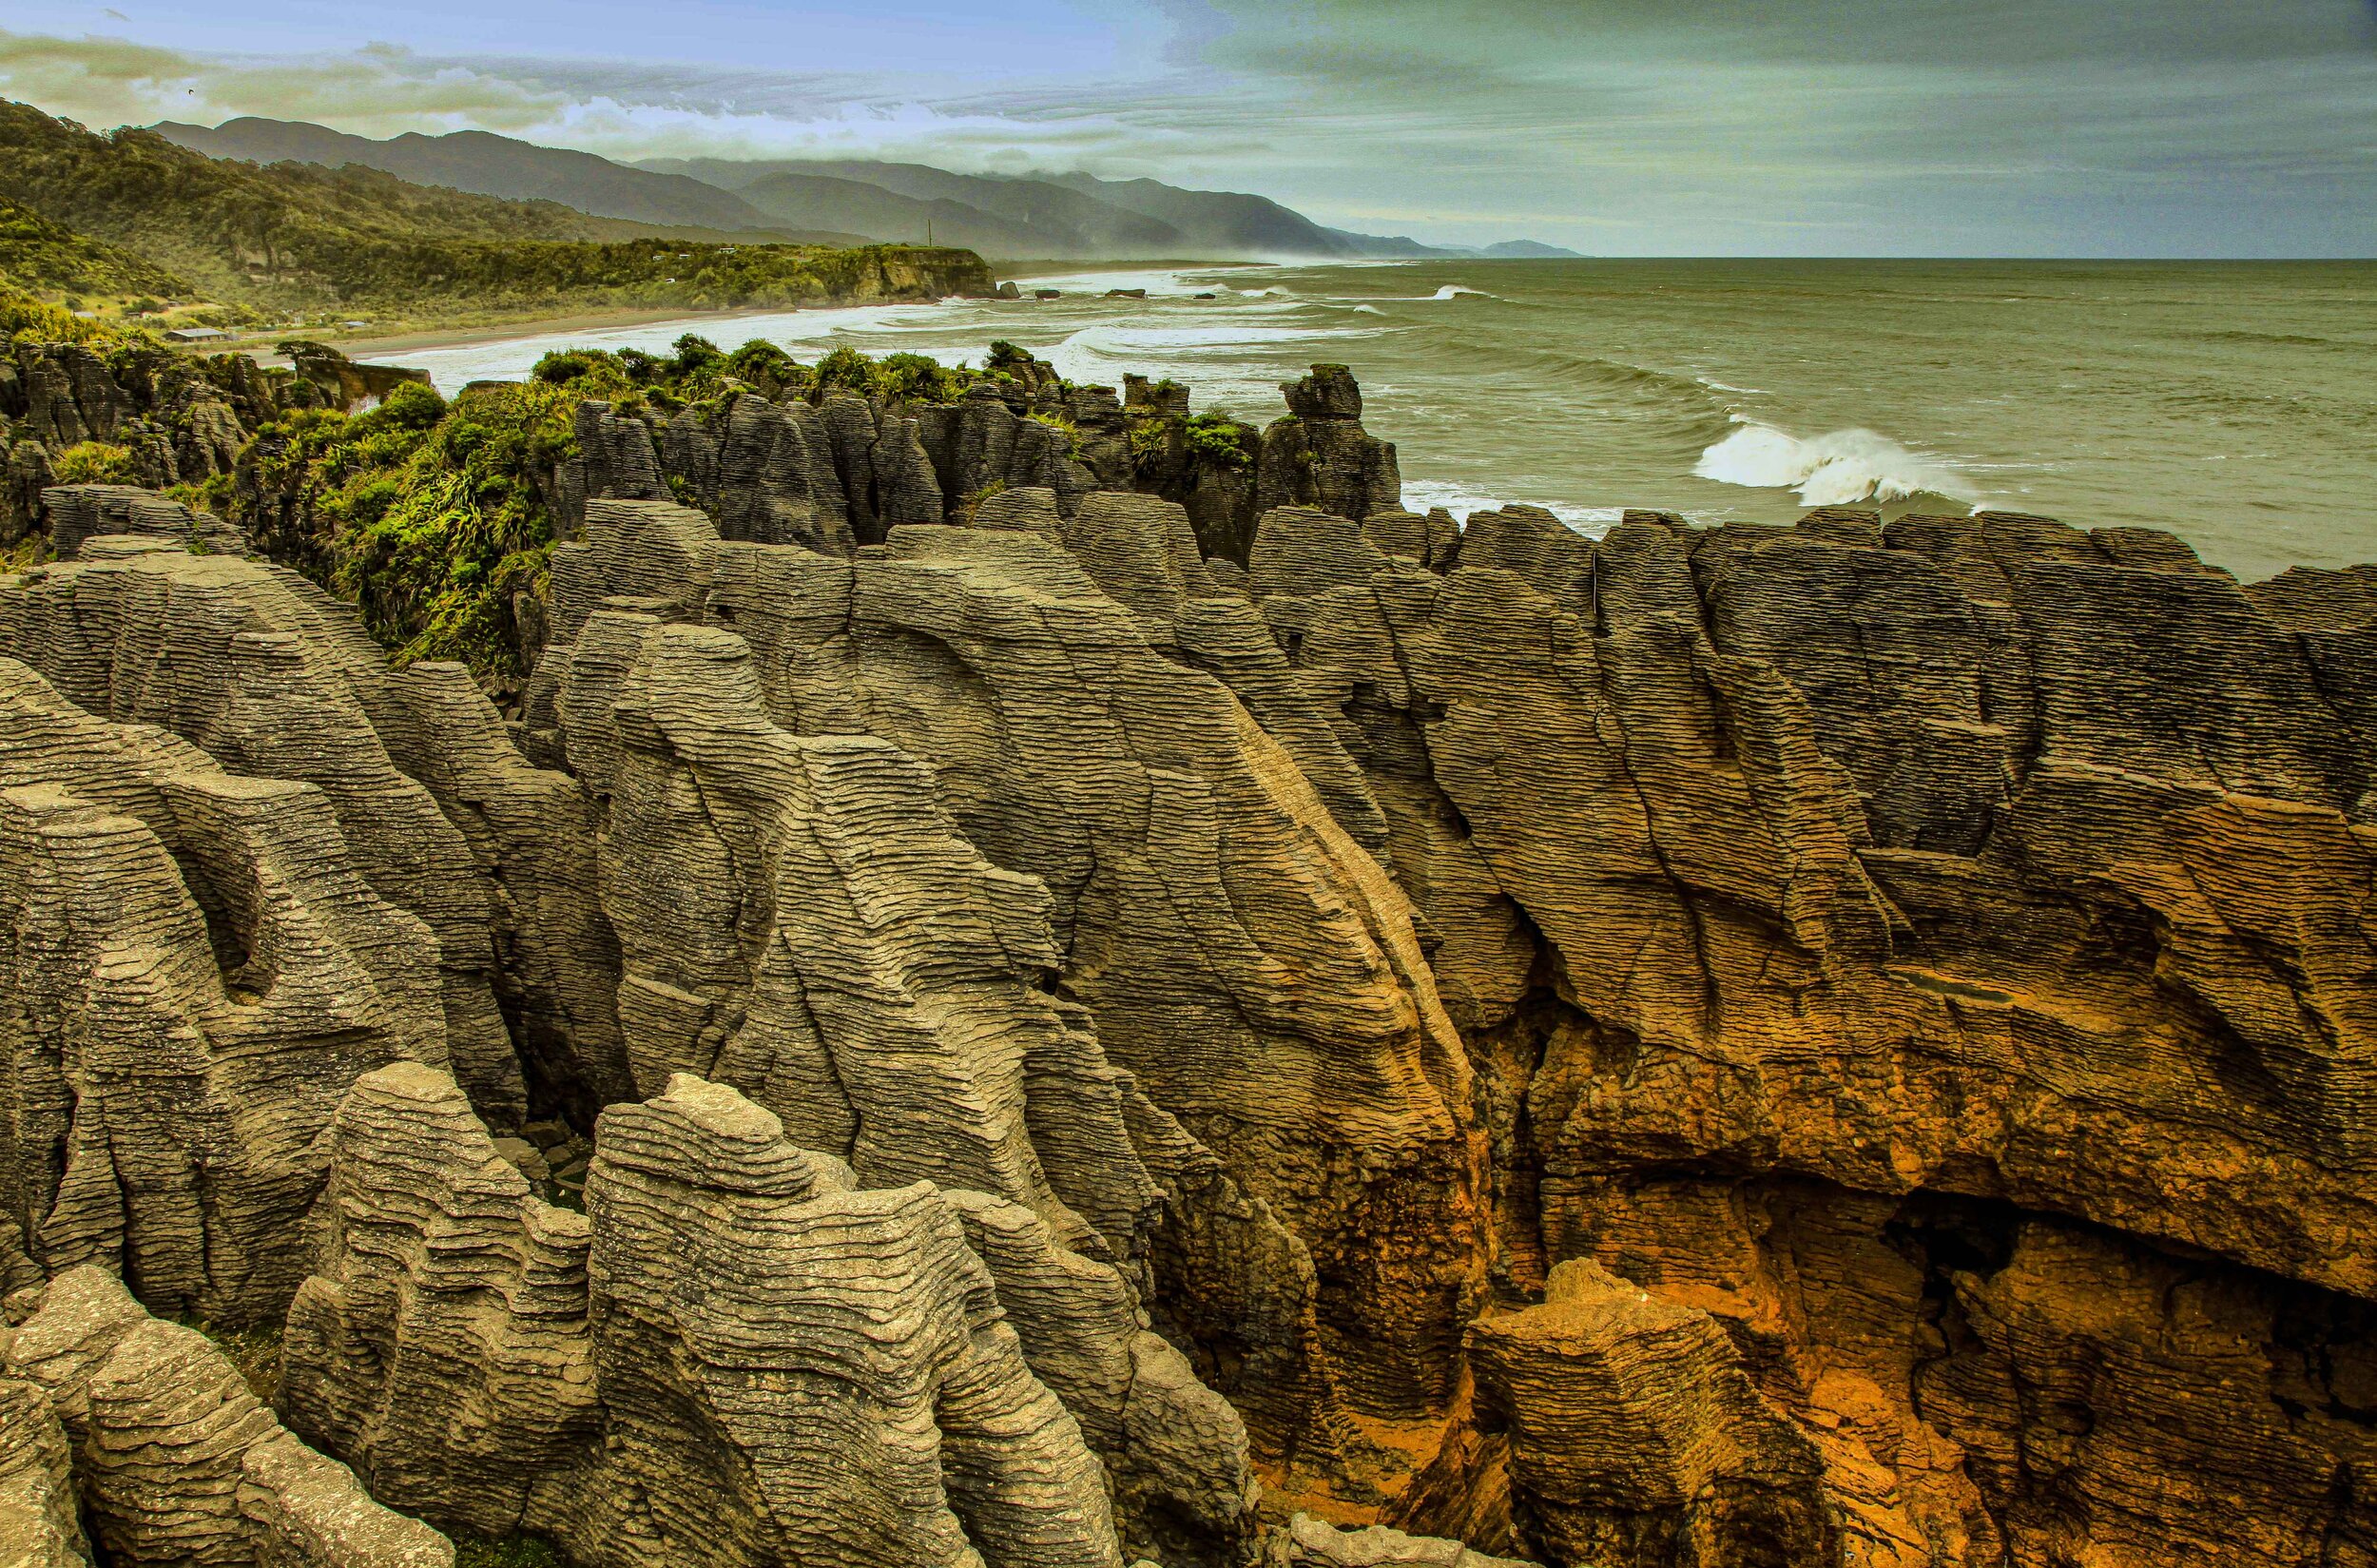  Pancake Rocks, New Zealand 